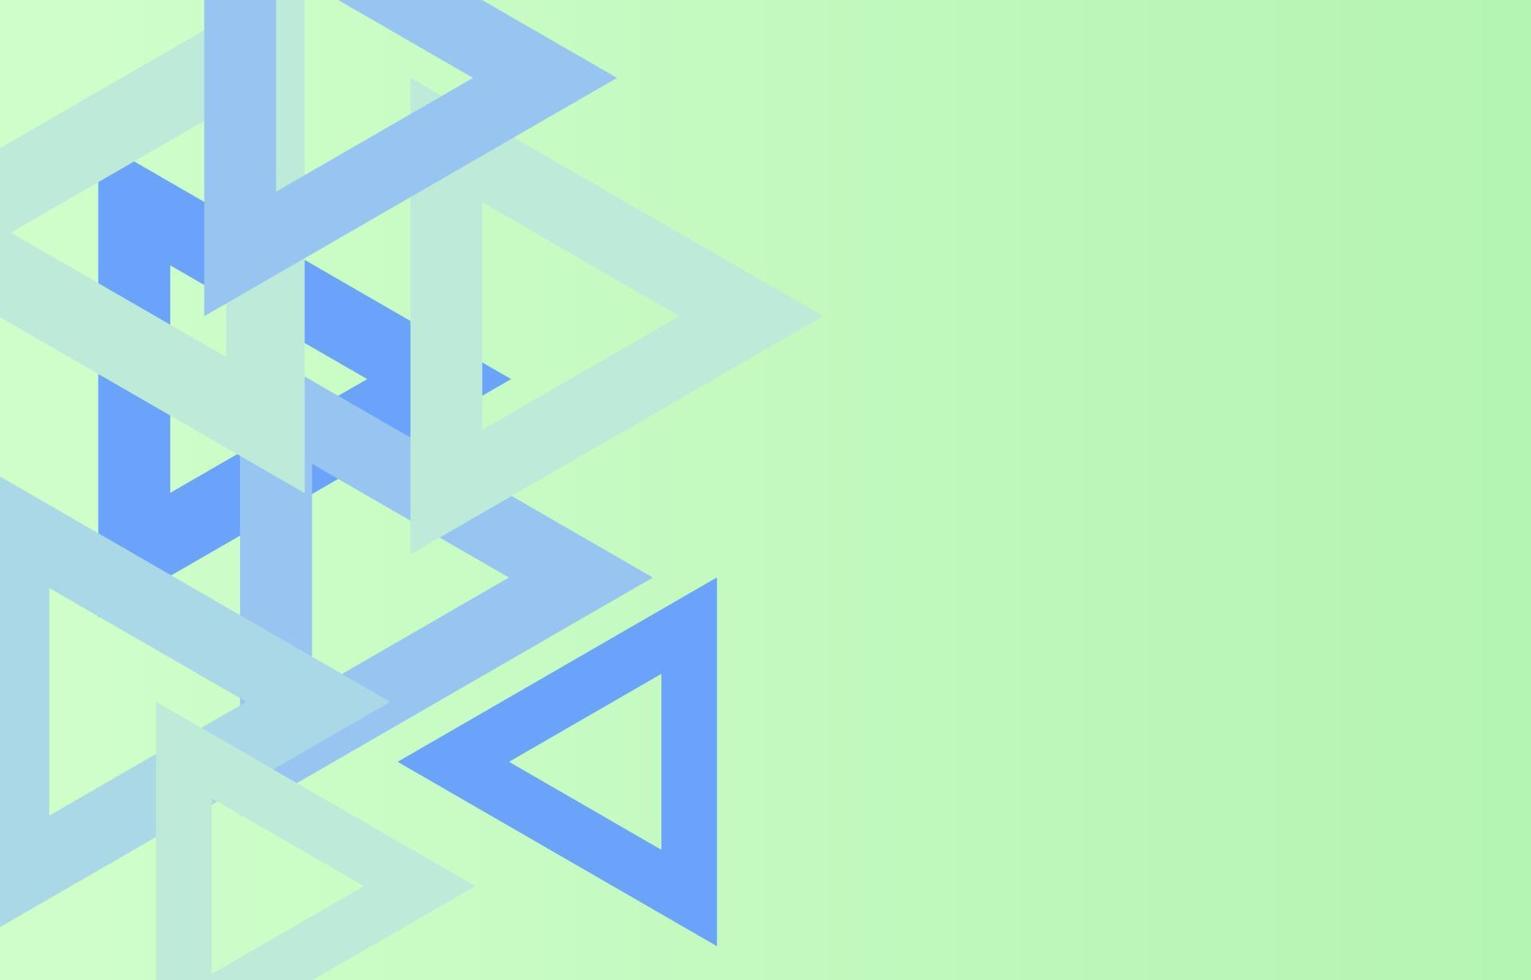 abstrakt moderna geometriska trianglar bakgrund vektor